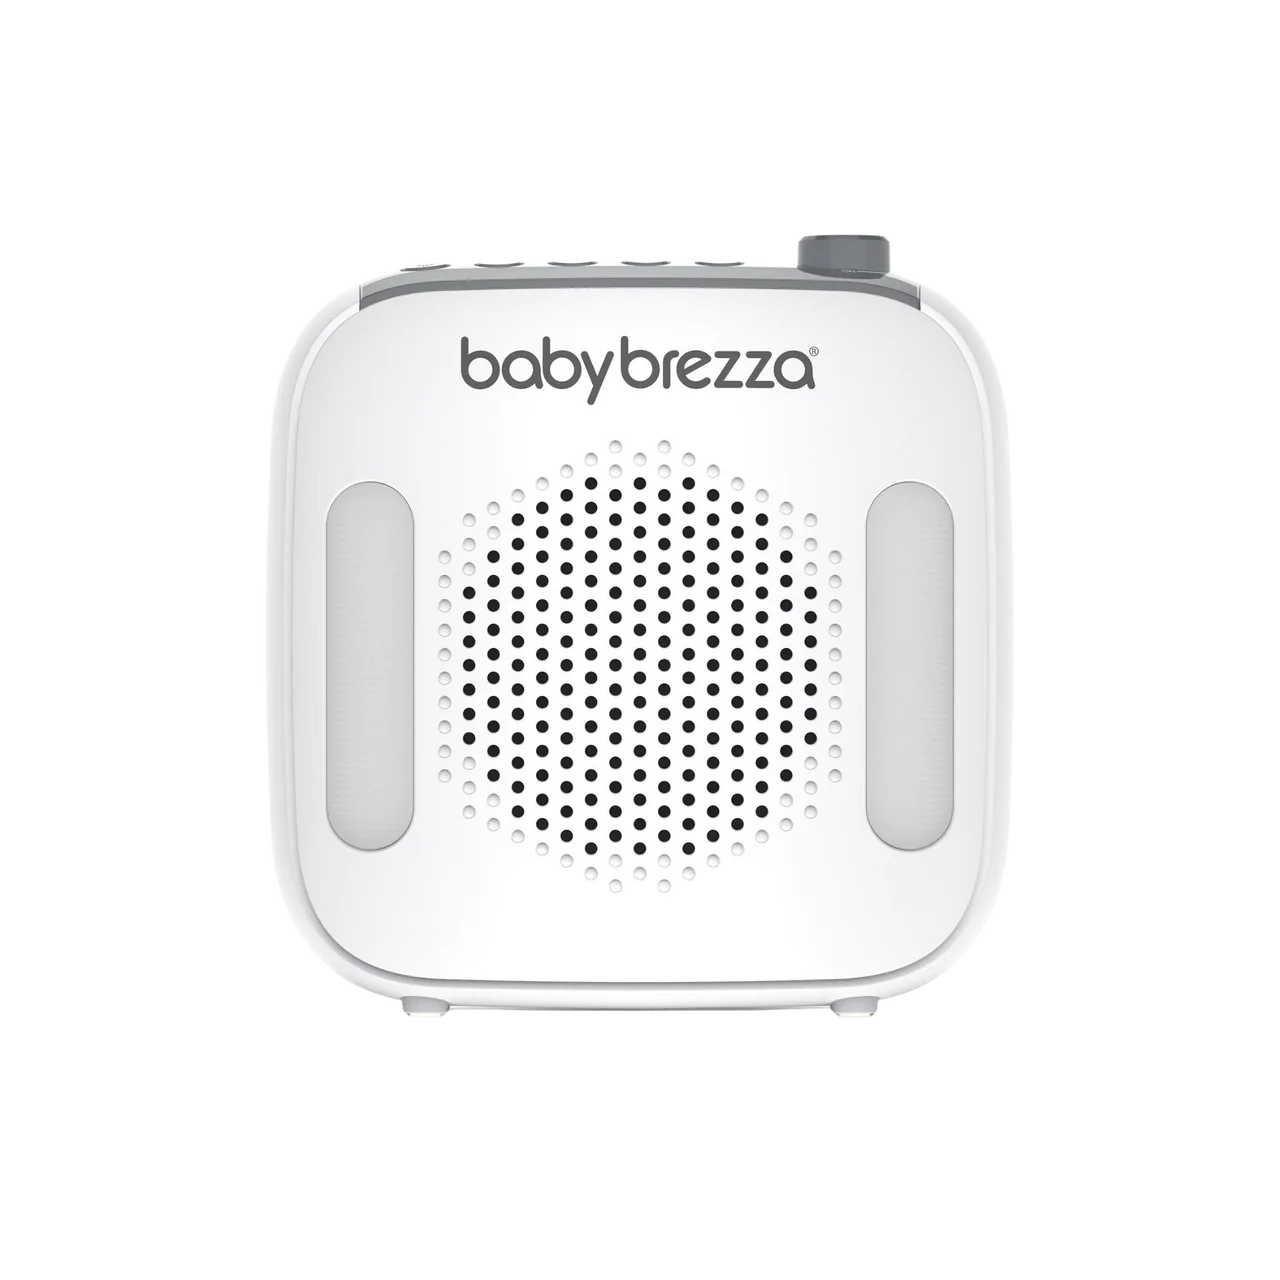 BABY BREZZA Sleep & Soothing Portable Sound Machine